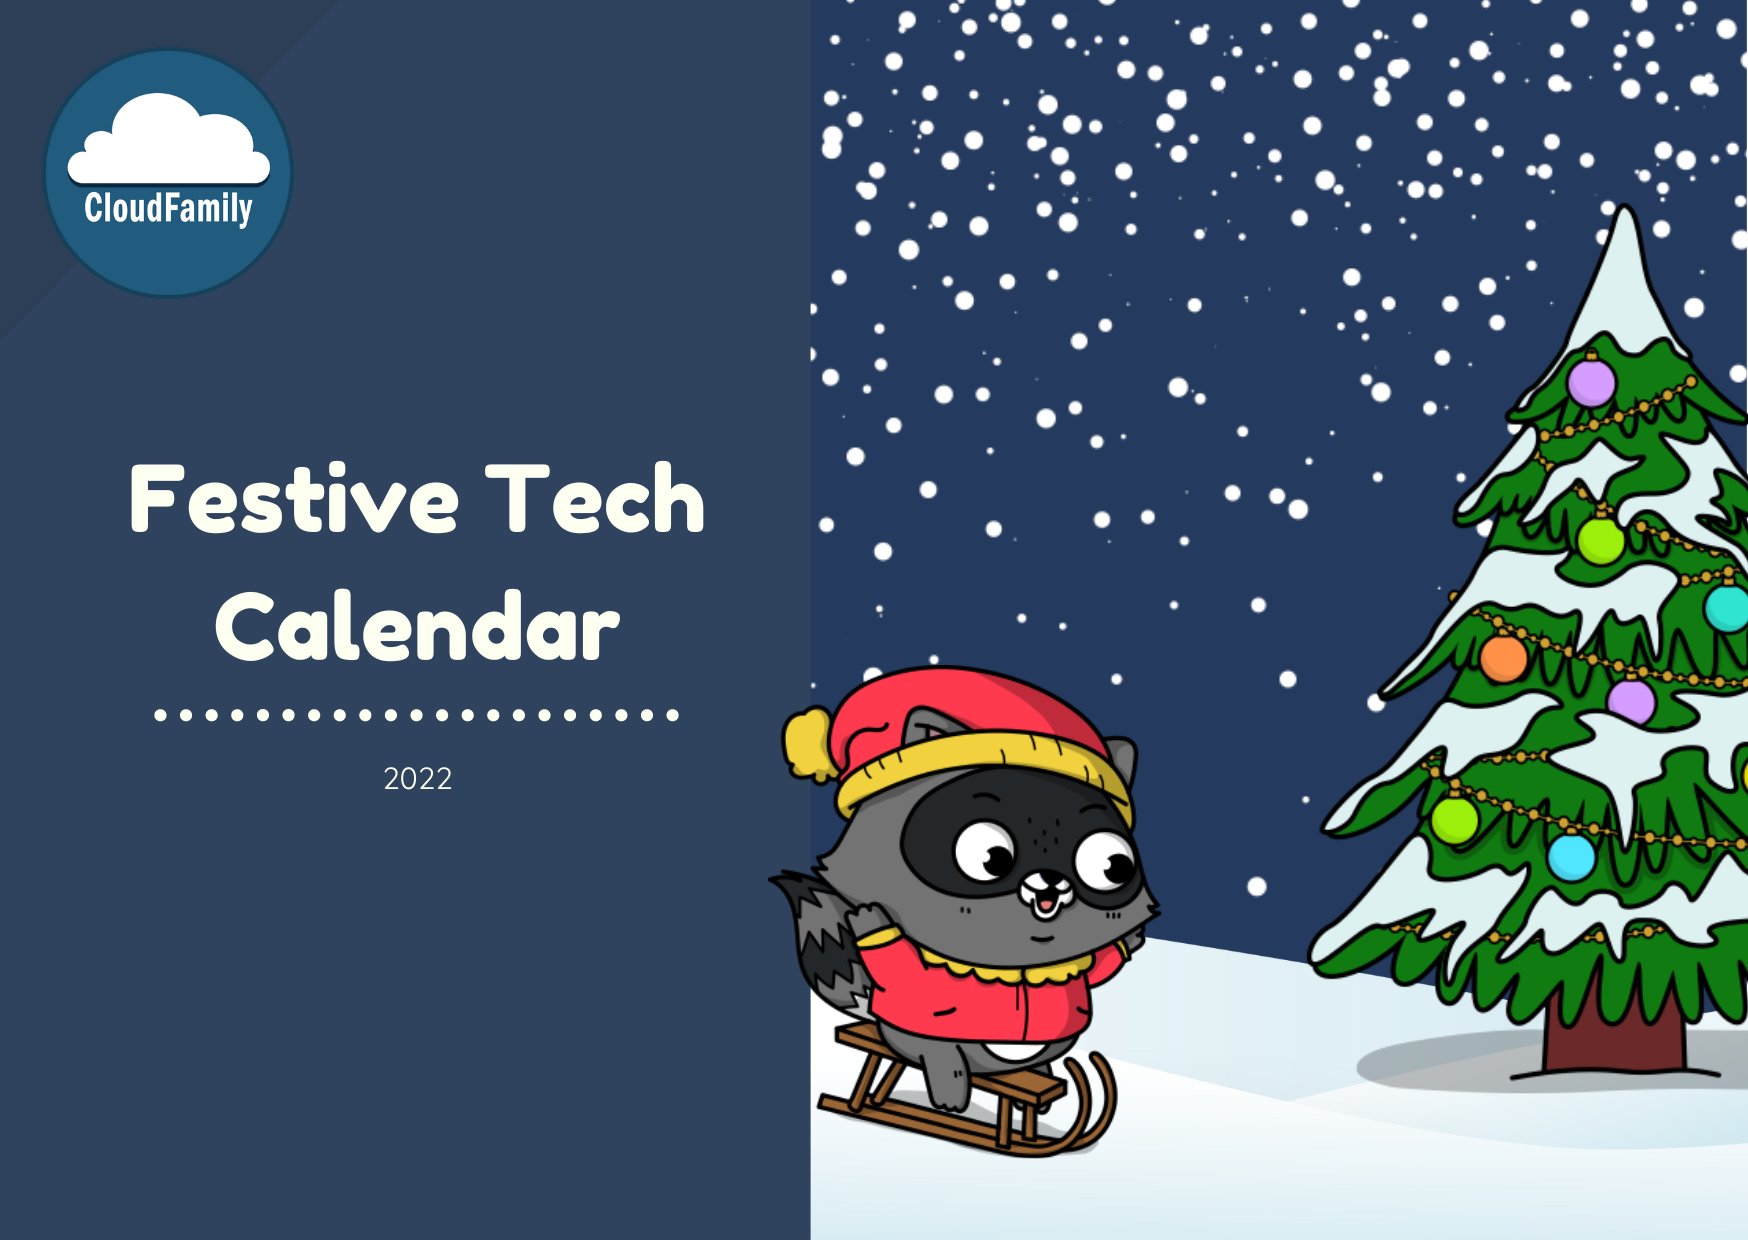 Festive Tech Calendar main image